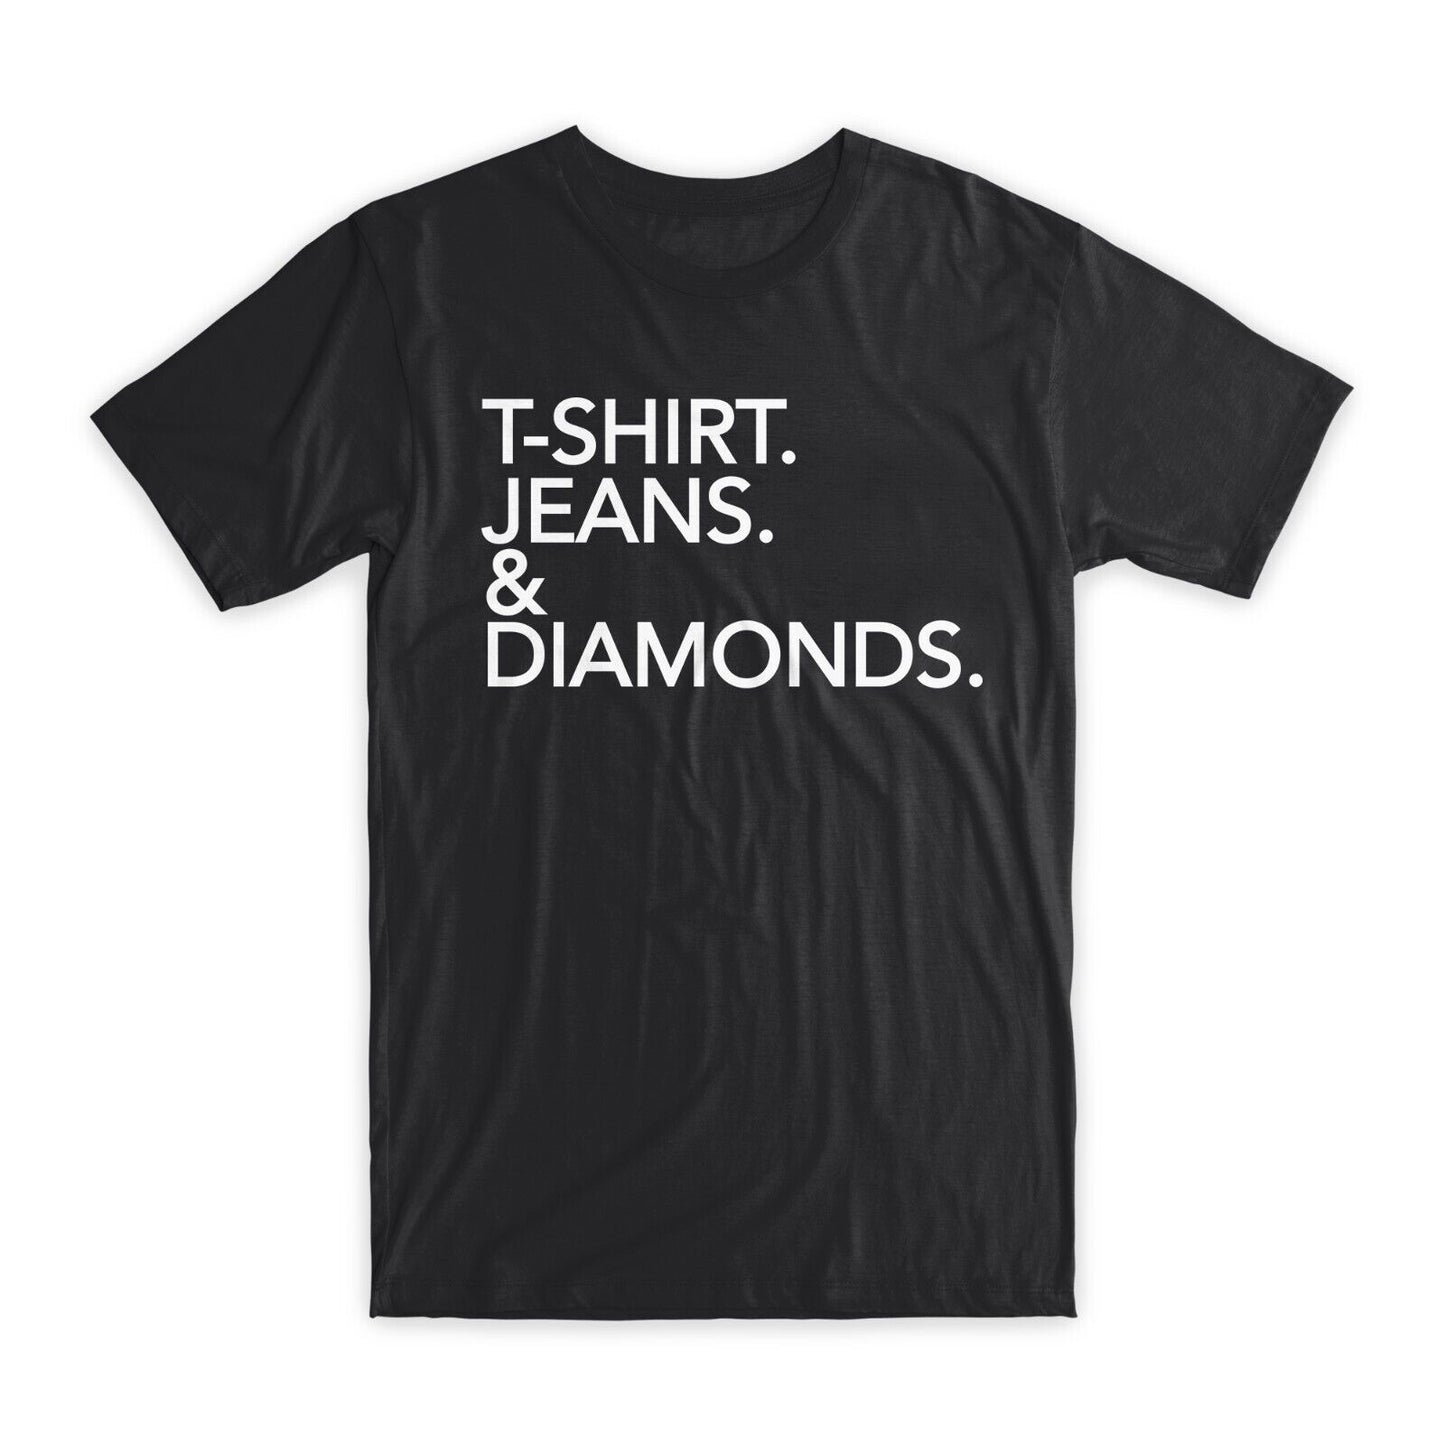 T-Shirt Jeans & Diamonds T-Shirt Premium Soft Cotton Funny Tees Novelty Gift NEW